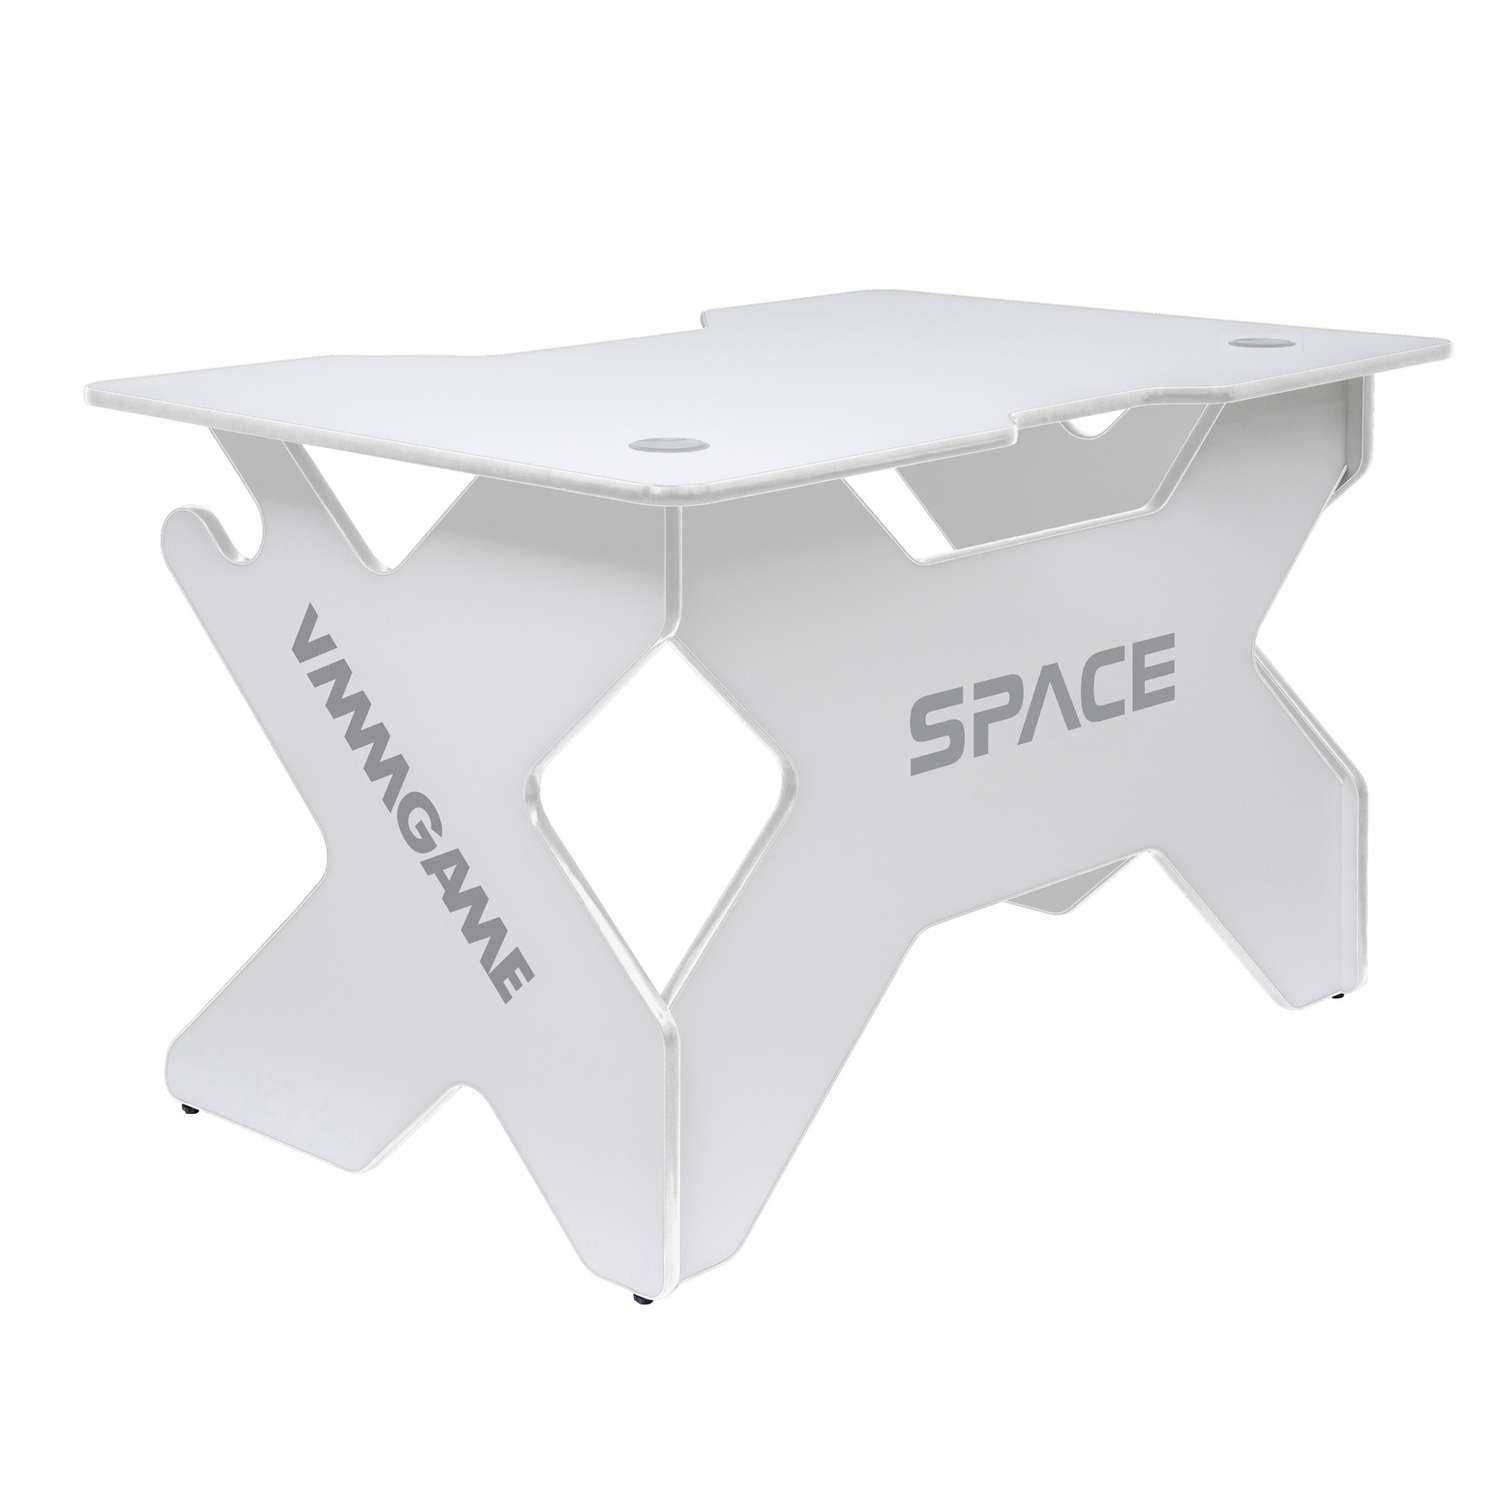 Vmmgame space. Vmmgame стол 140. Игровой компьютерный стол vmmgame Space 140. Игровой компьютерный стол vmmgame Space Lunar. Стол vmmgame Space 140 Light Blue (St-3wbe).